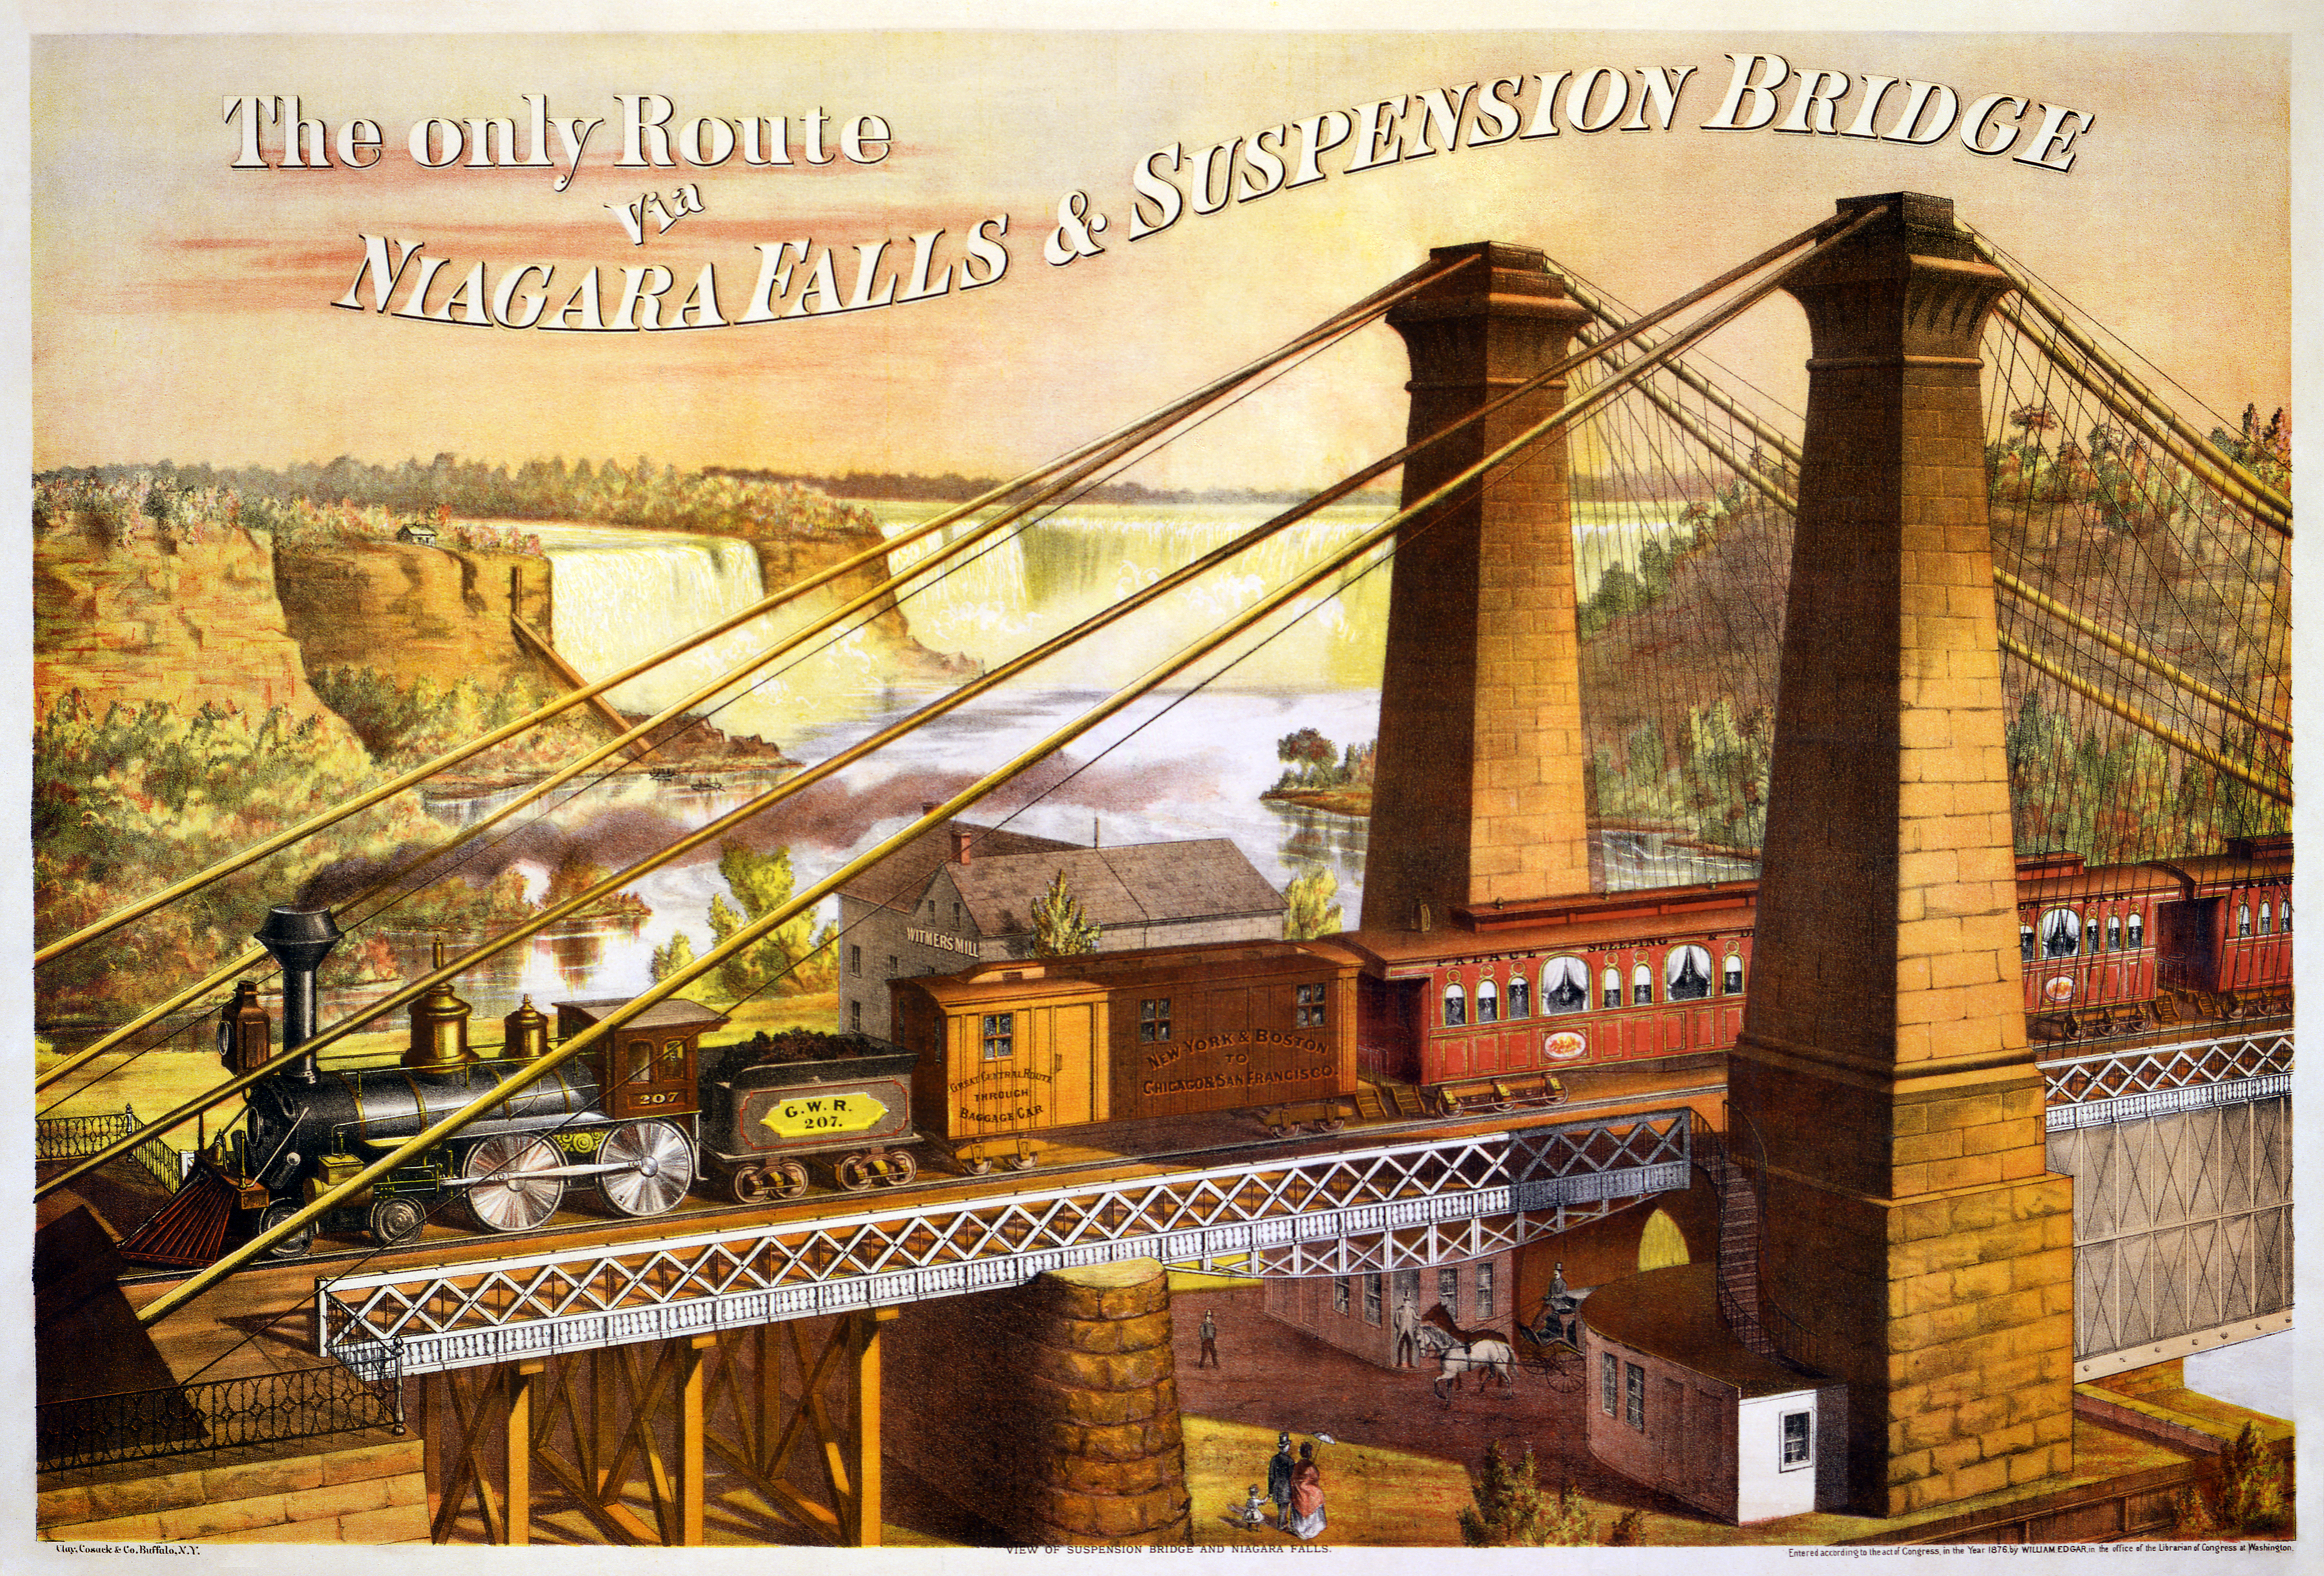 rail advertisement for Niagara Falls suspension bridge